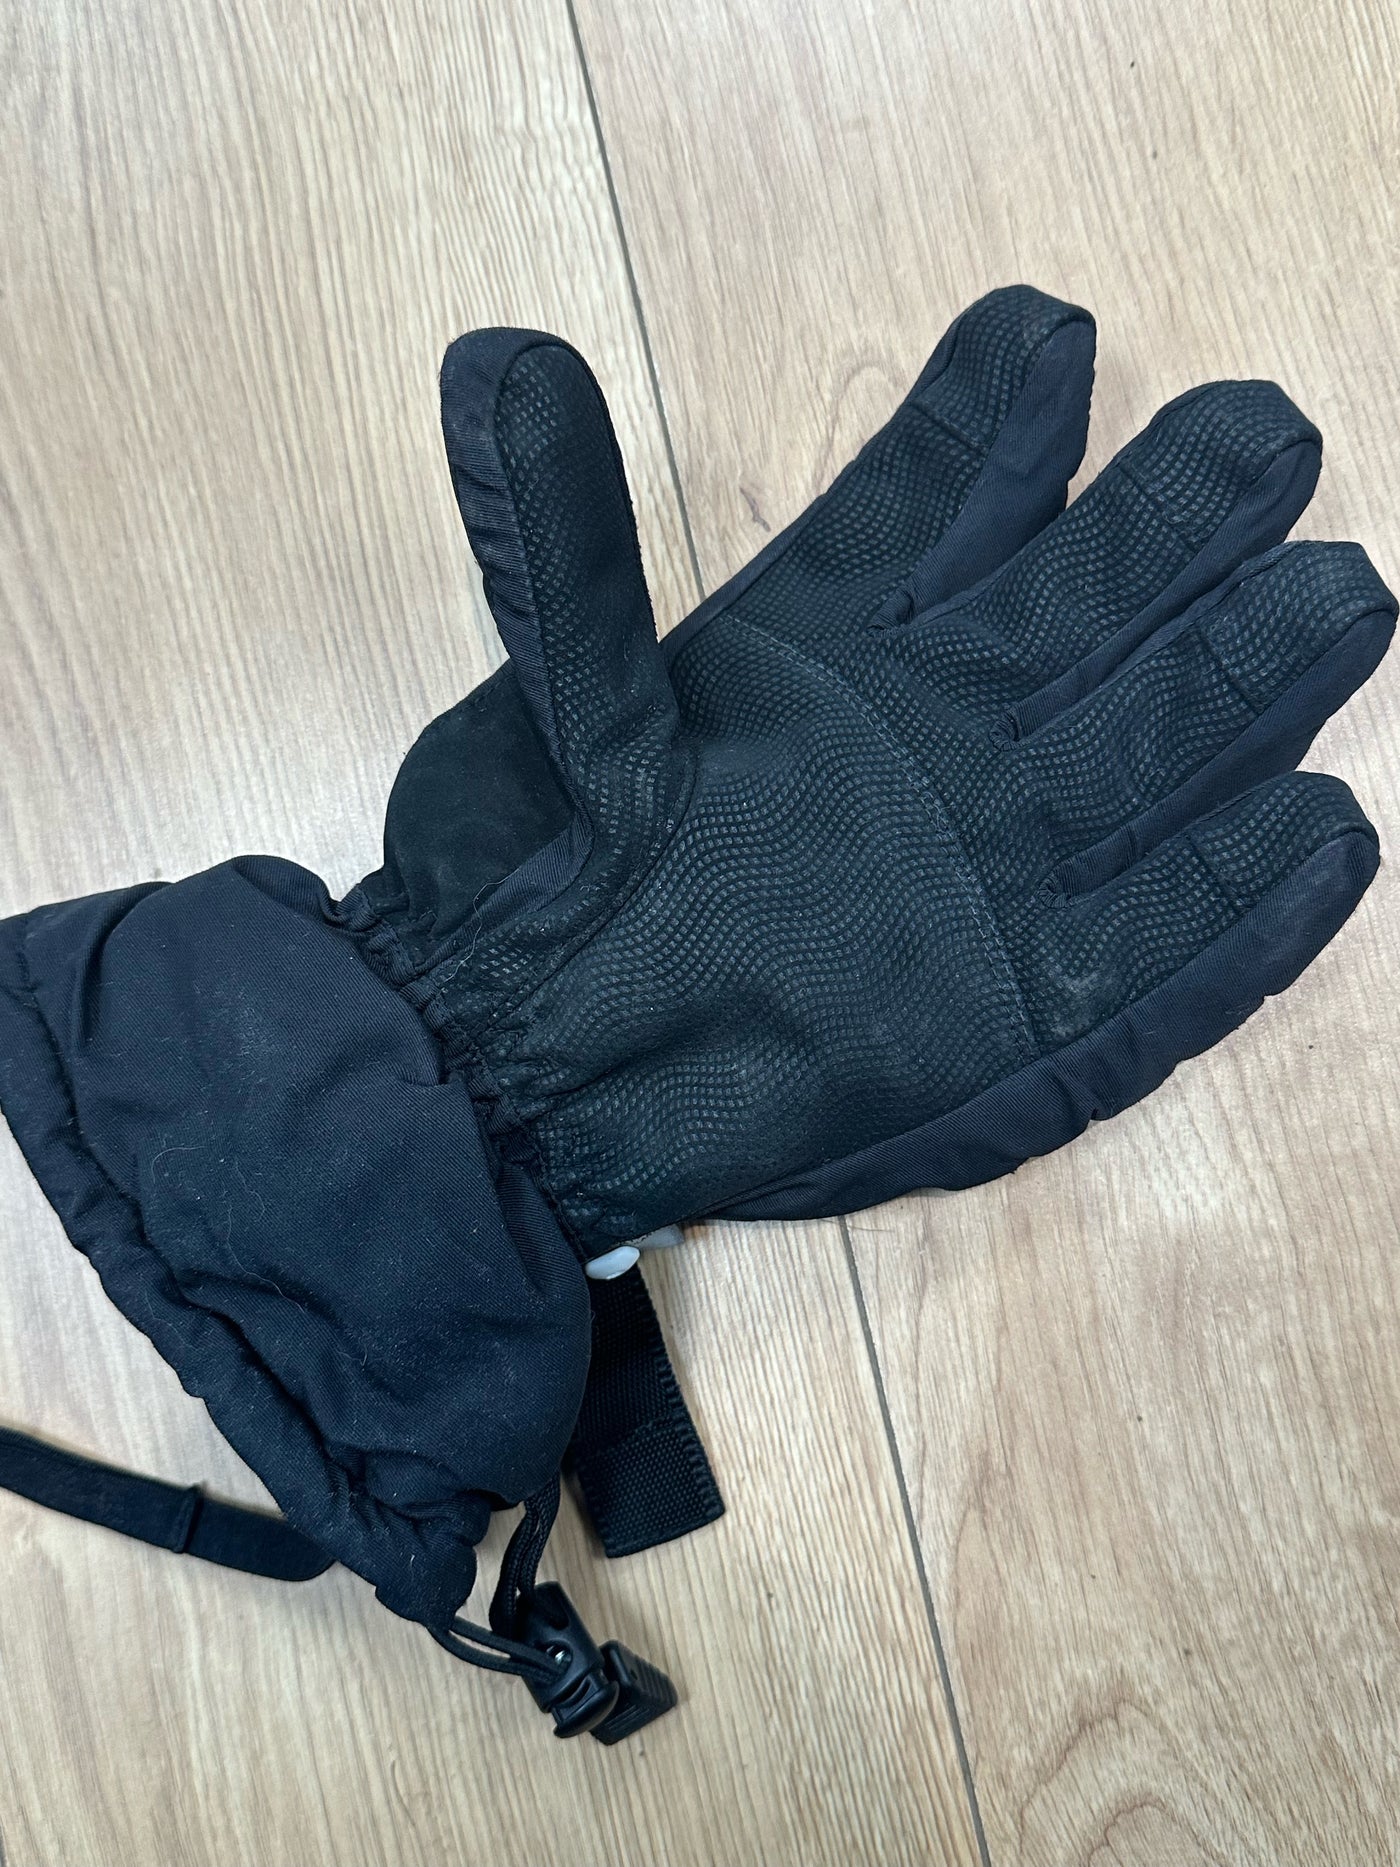 Pre-loved Park Peak Piste Epic Glove Mens Small (538)